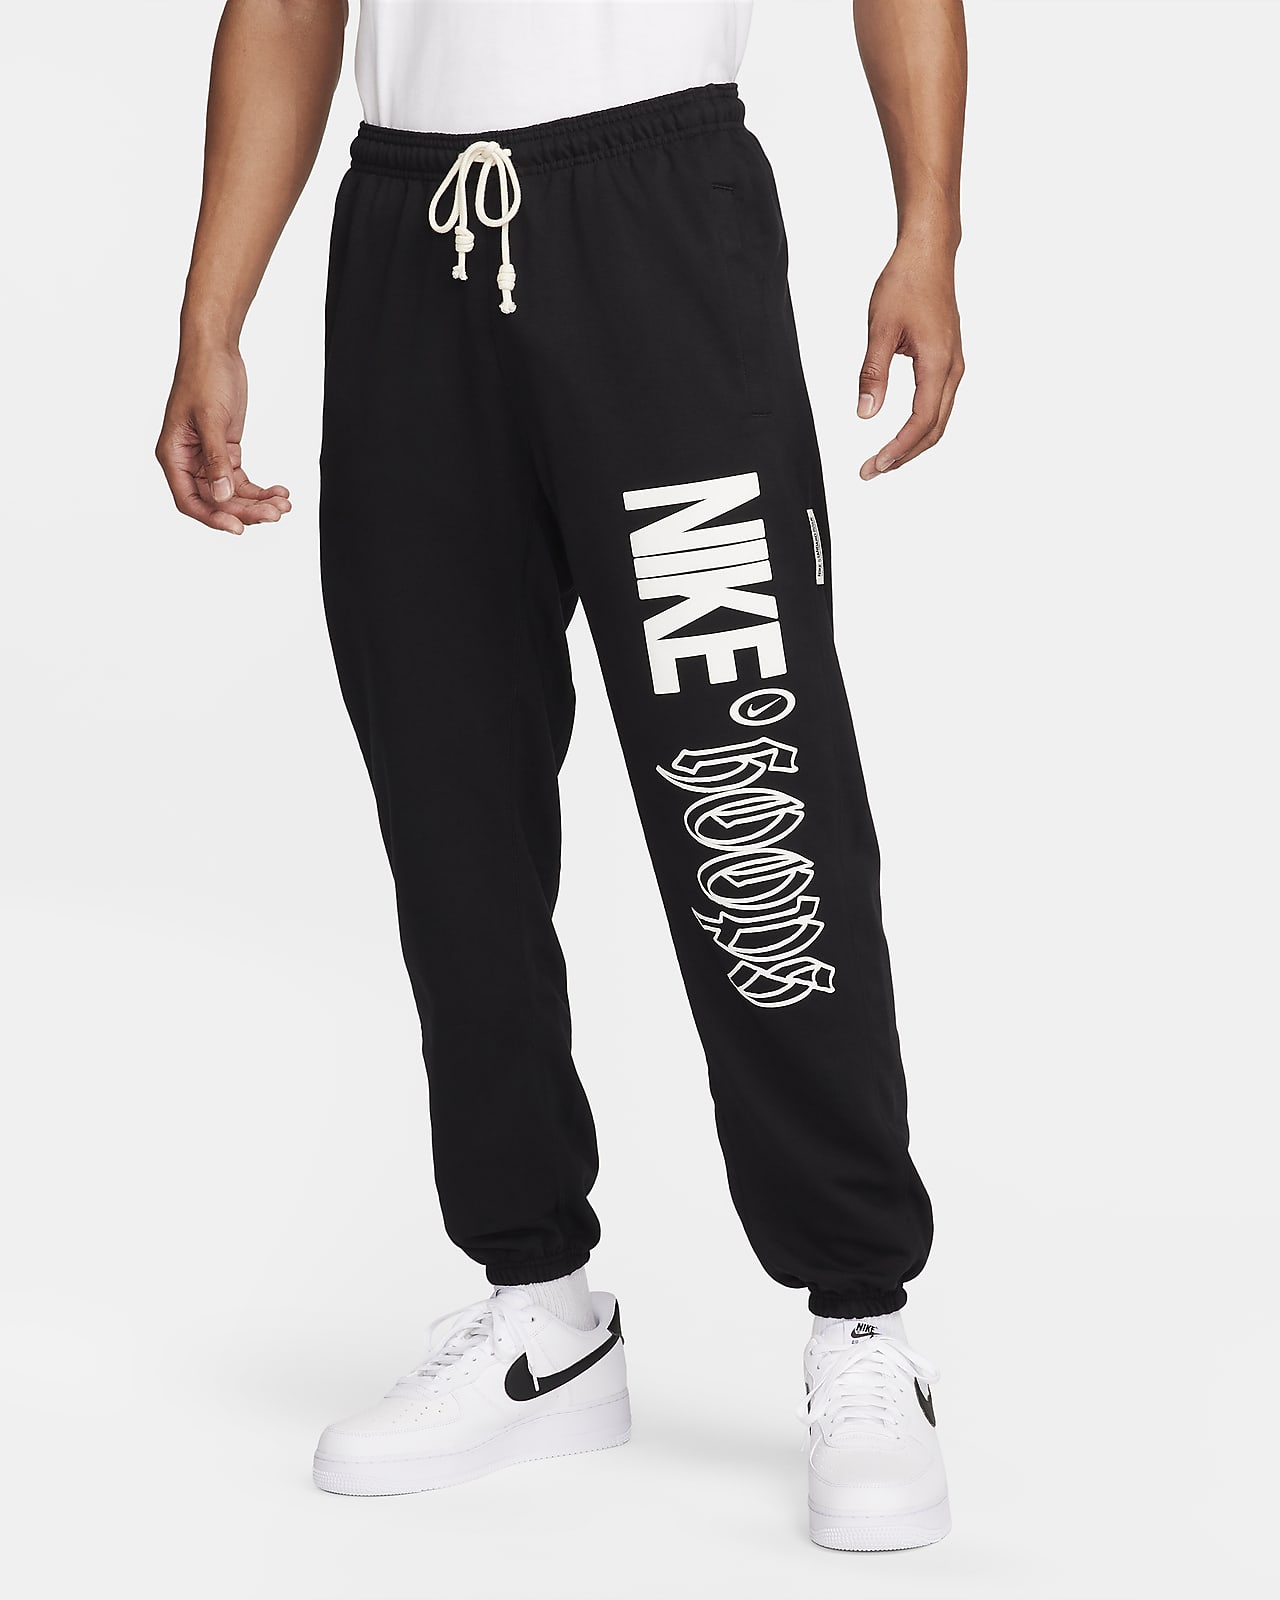 Pantaloni da basket Dri-FIT Nike Standard Issue – Uomo